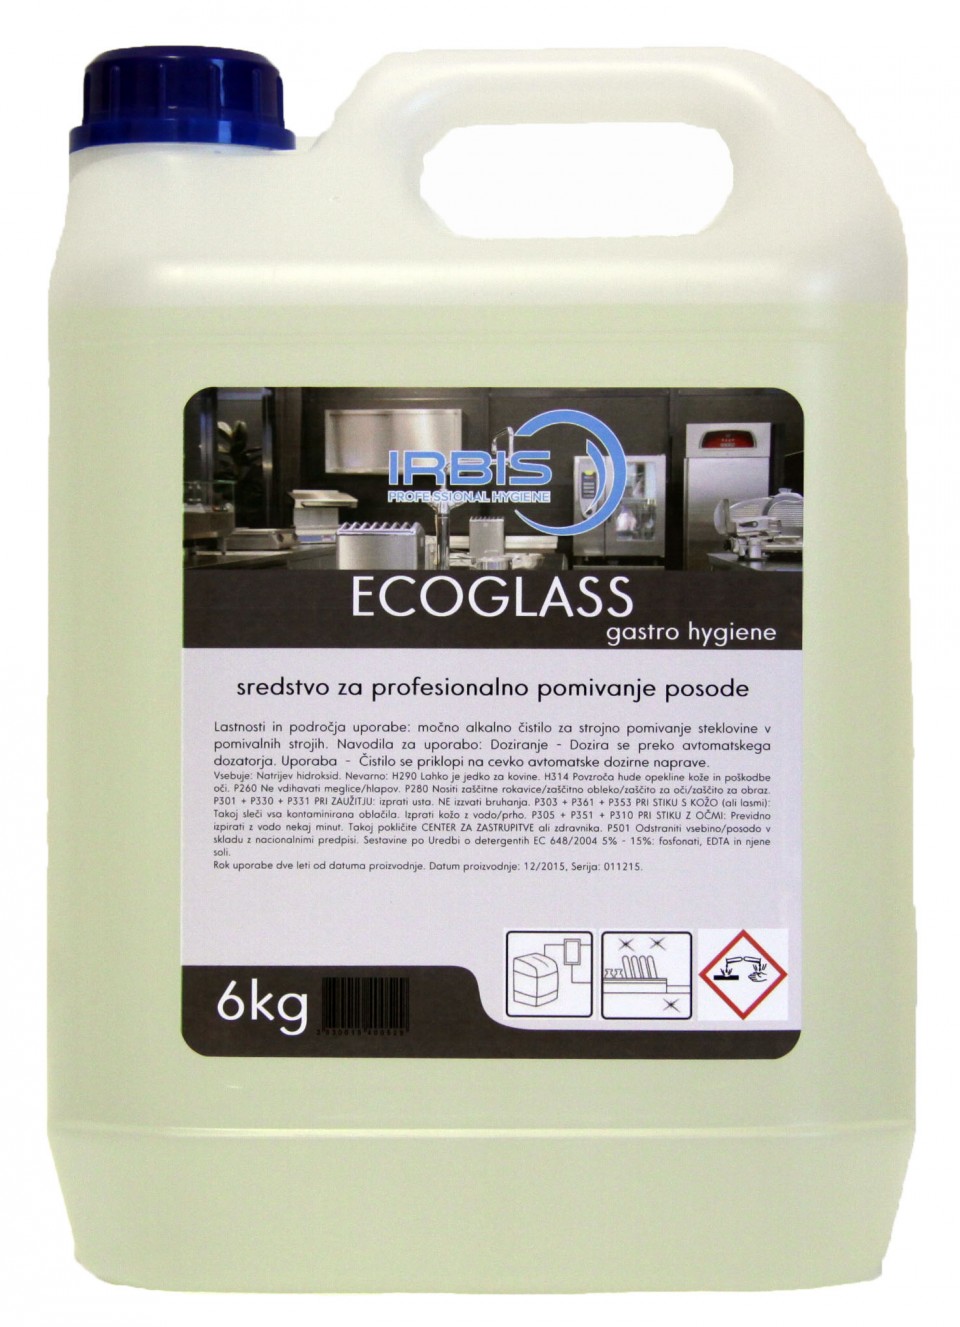 ECOGLASS 6kg koncentrat, sredstvo za mašinsko pranje suđa Image